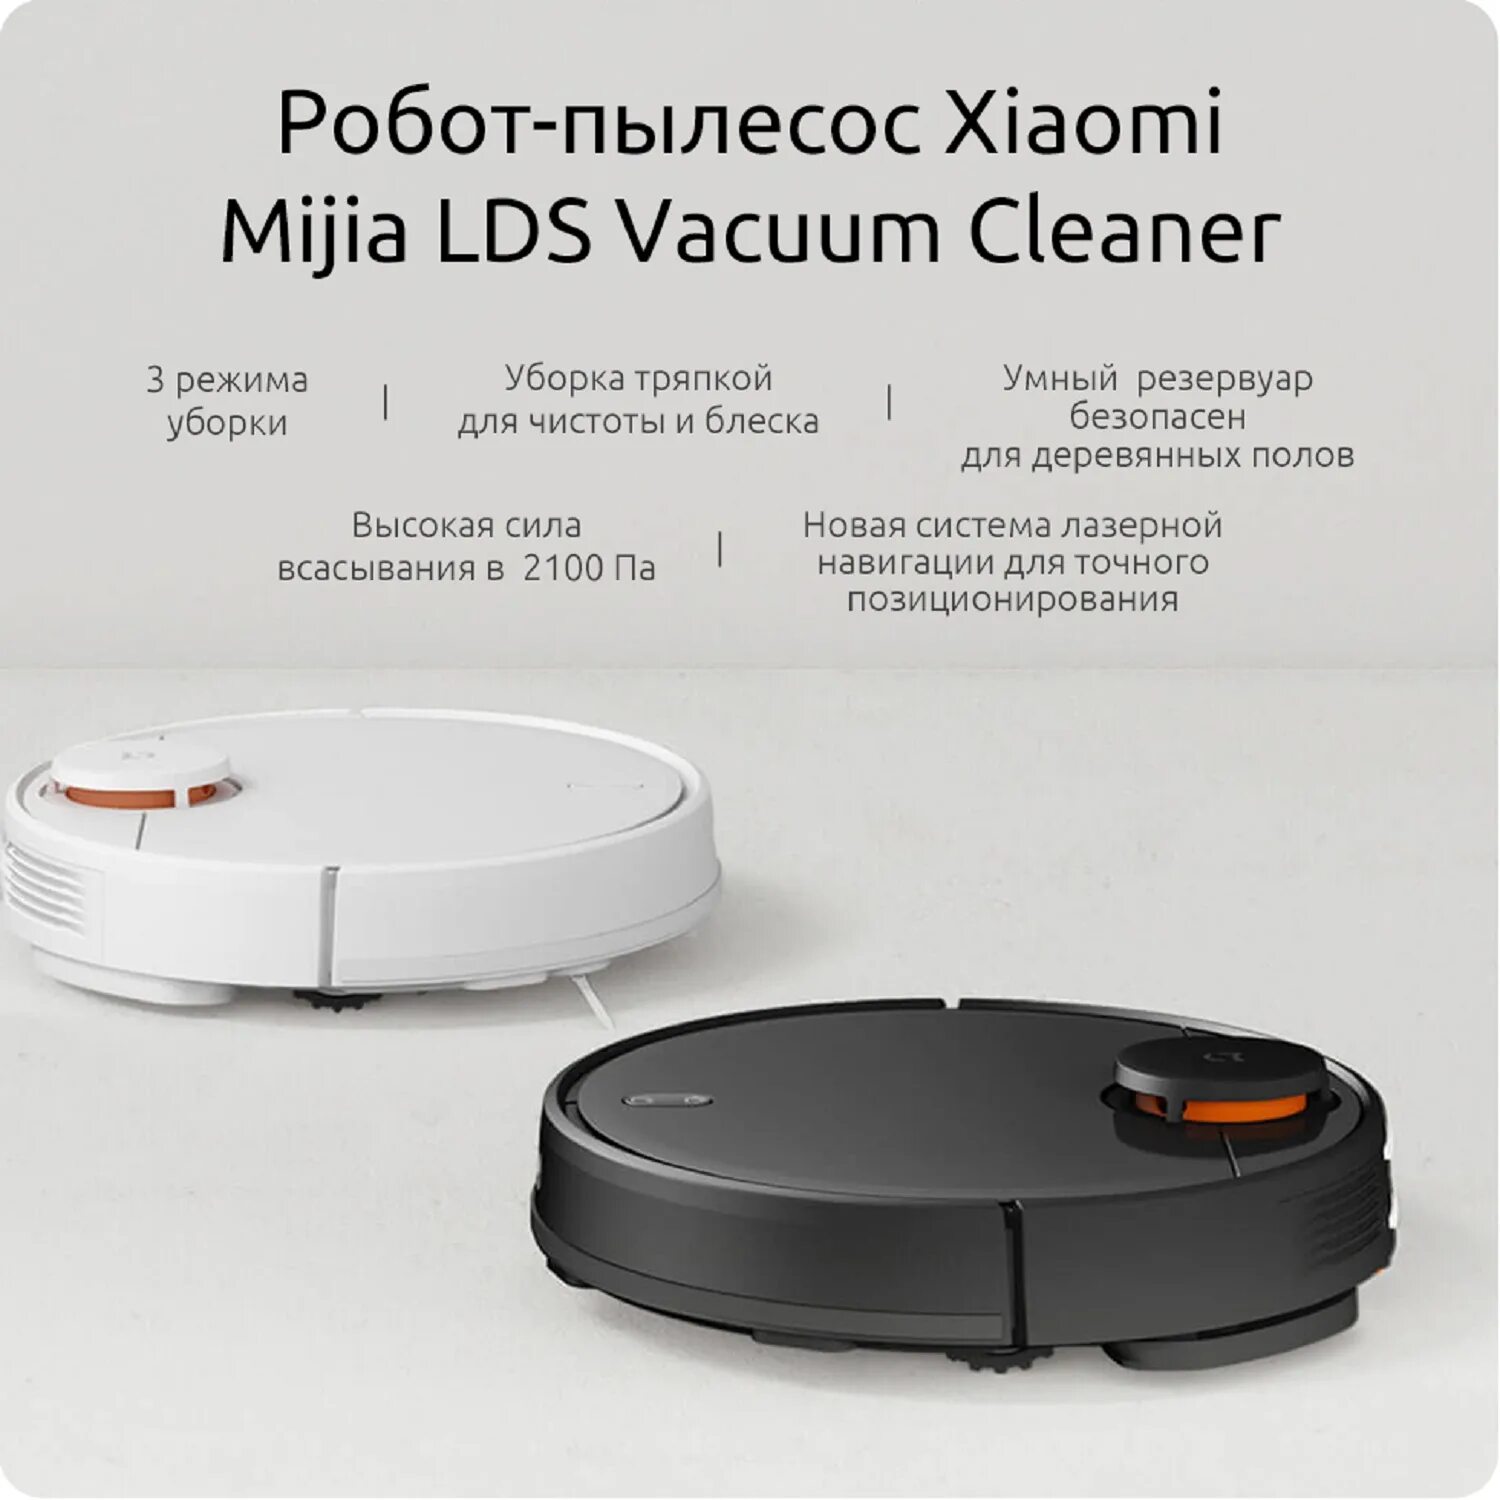 Xiaomi mijia vacuum cleaner pro. Робот-пылесос Xiaomi Mijia Robot Vacuum Cleaner. Робот-пылесос Xiaomi Vacuum Cleaner 1s. Робот-пылесос Xiaomi Mijia LDS Vacuum Cleaner. Xiaomi Mijia Robot Vacuum Mop 2 Pro.